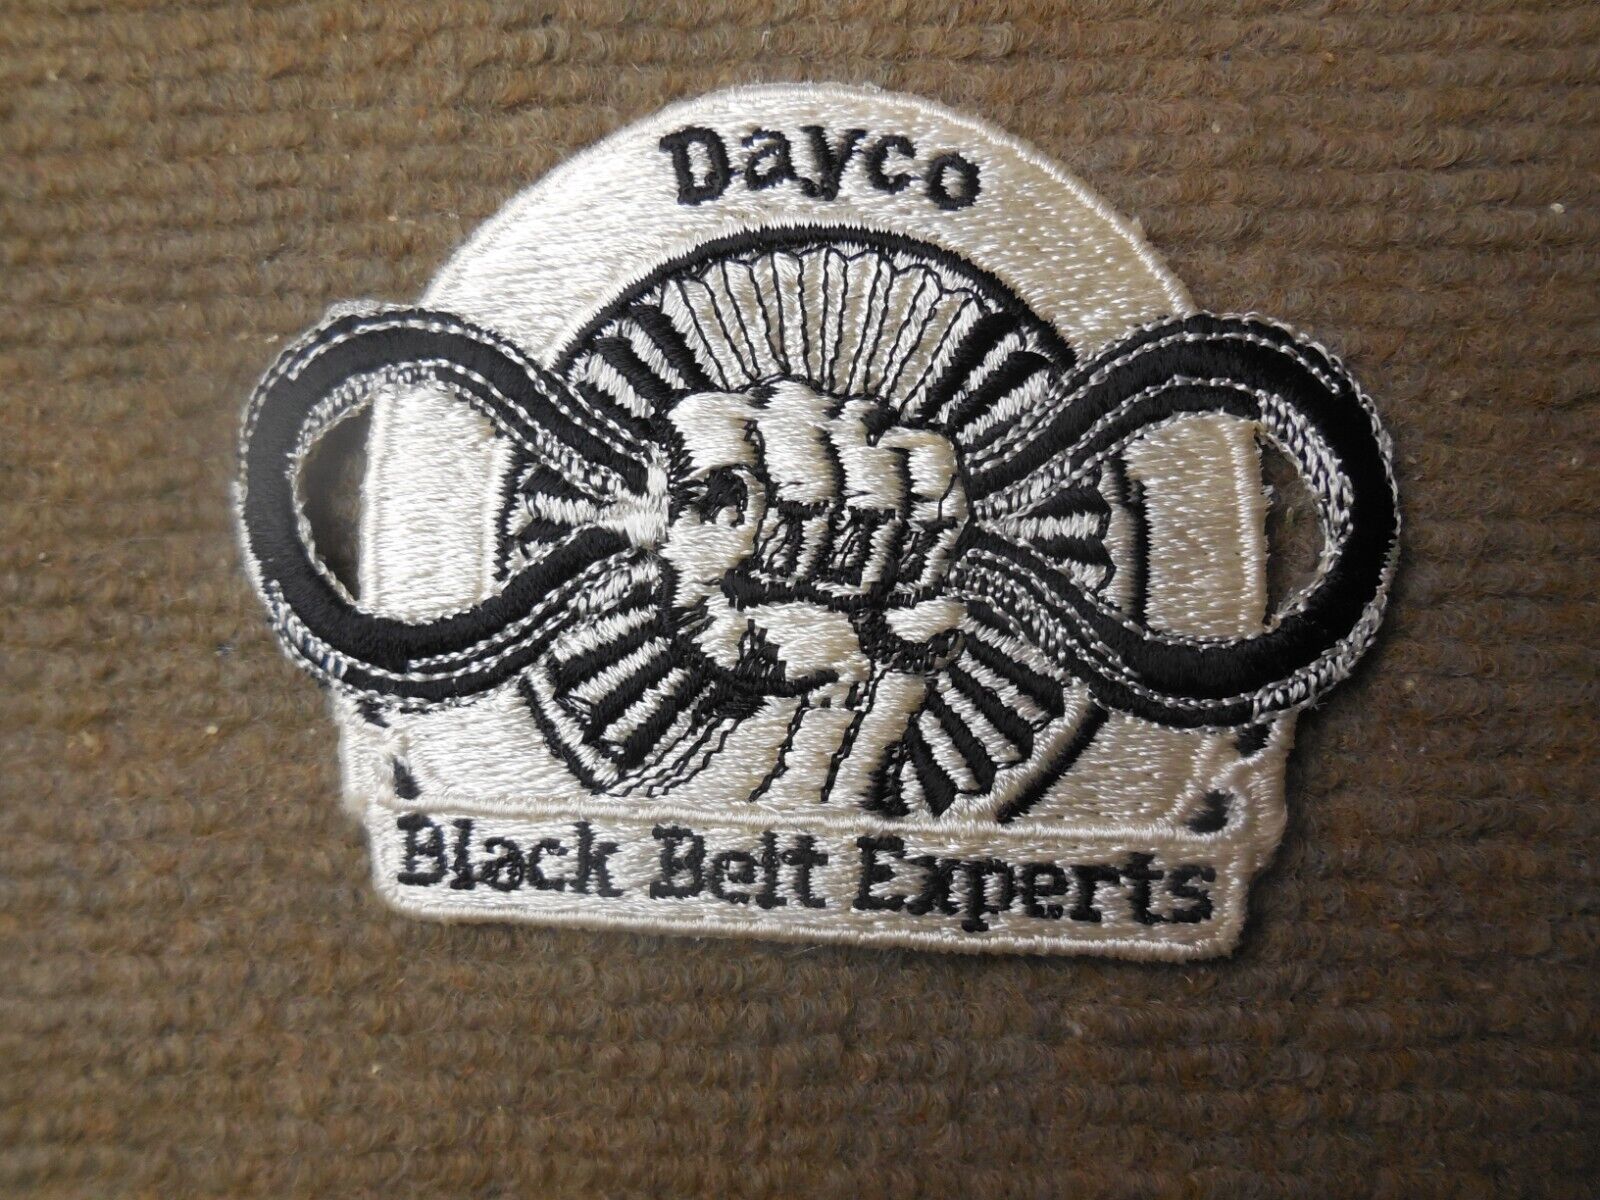 Vintage Dayco Belts And Hoses Black Belt Experts Patch